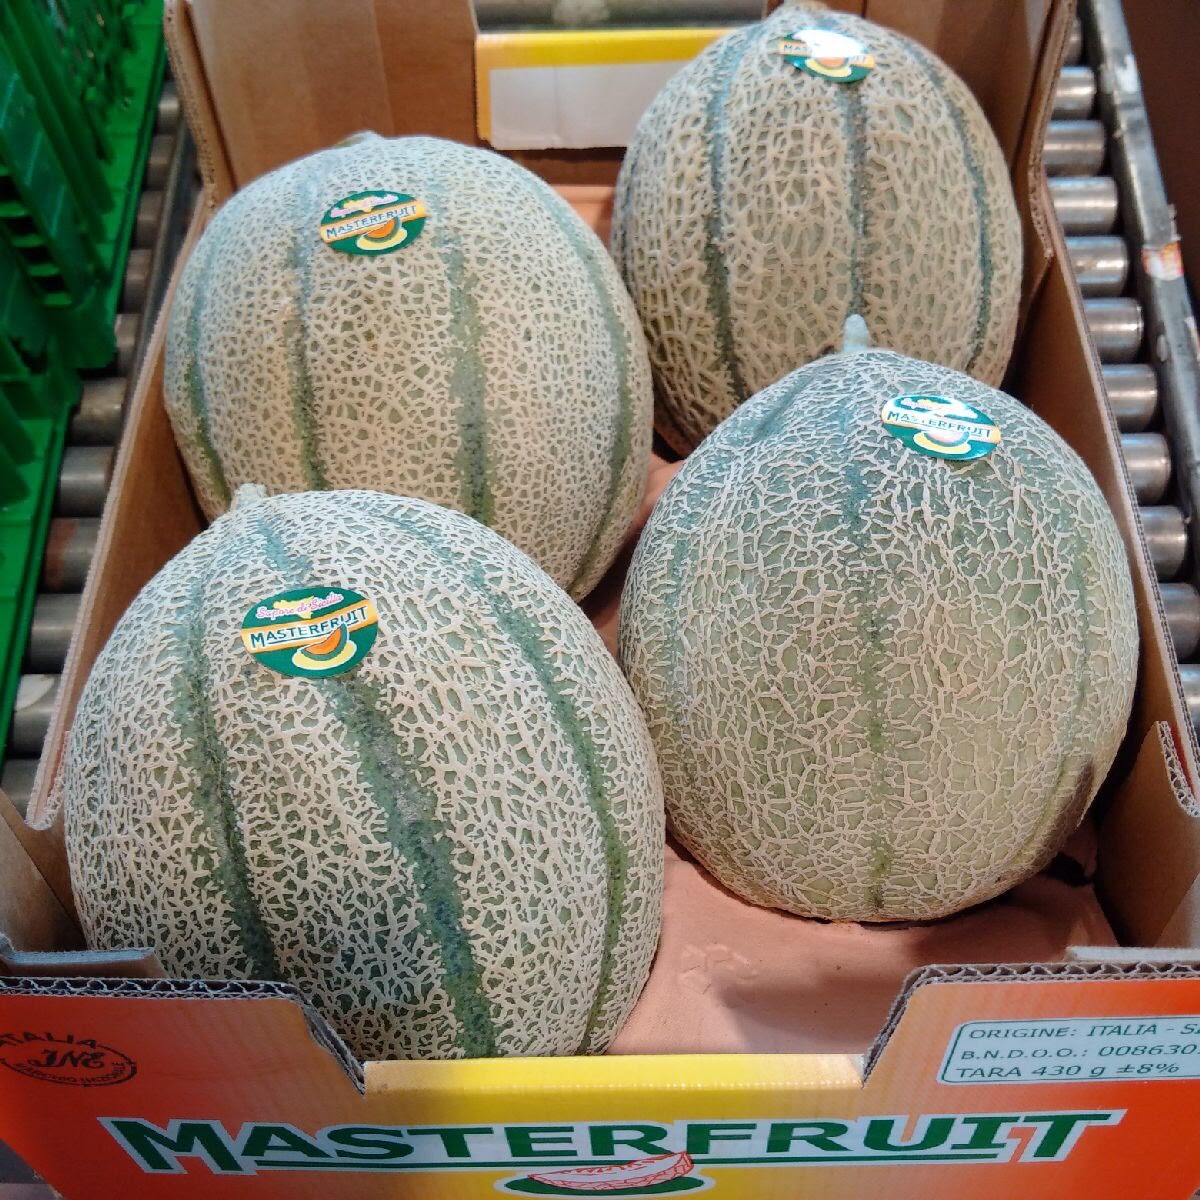 Cantaloupe Melons - Sicily